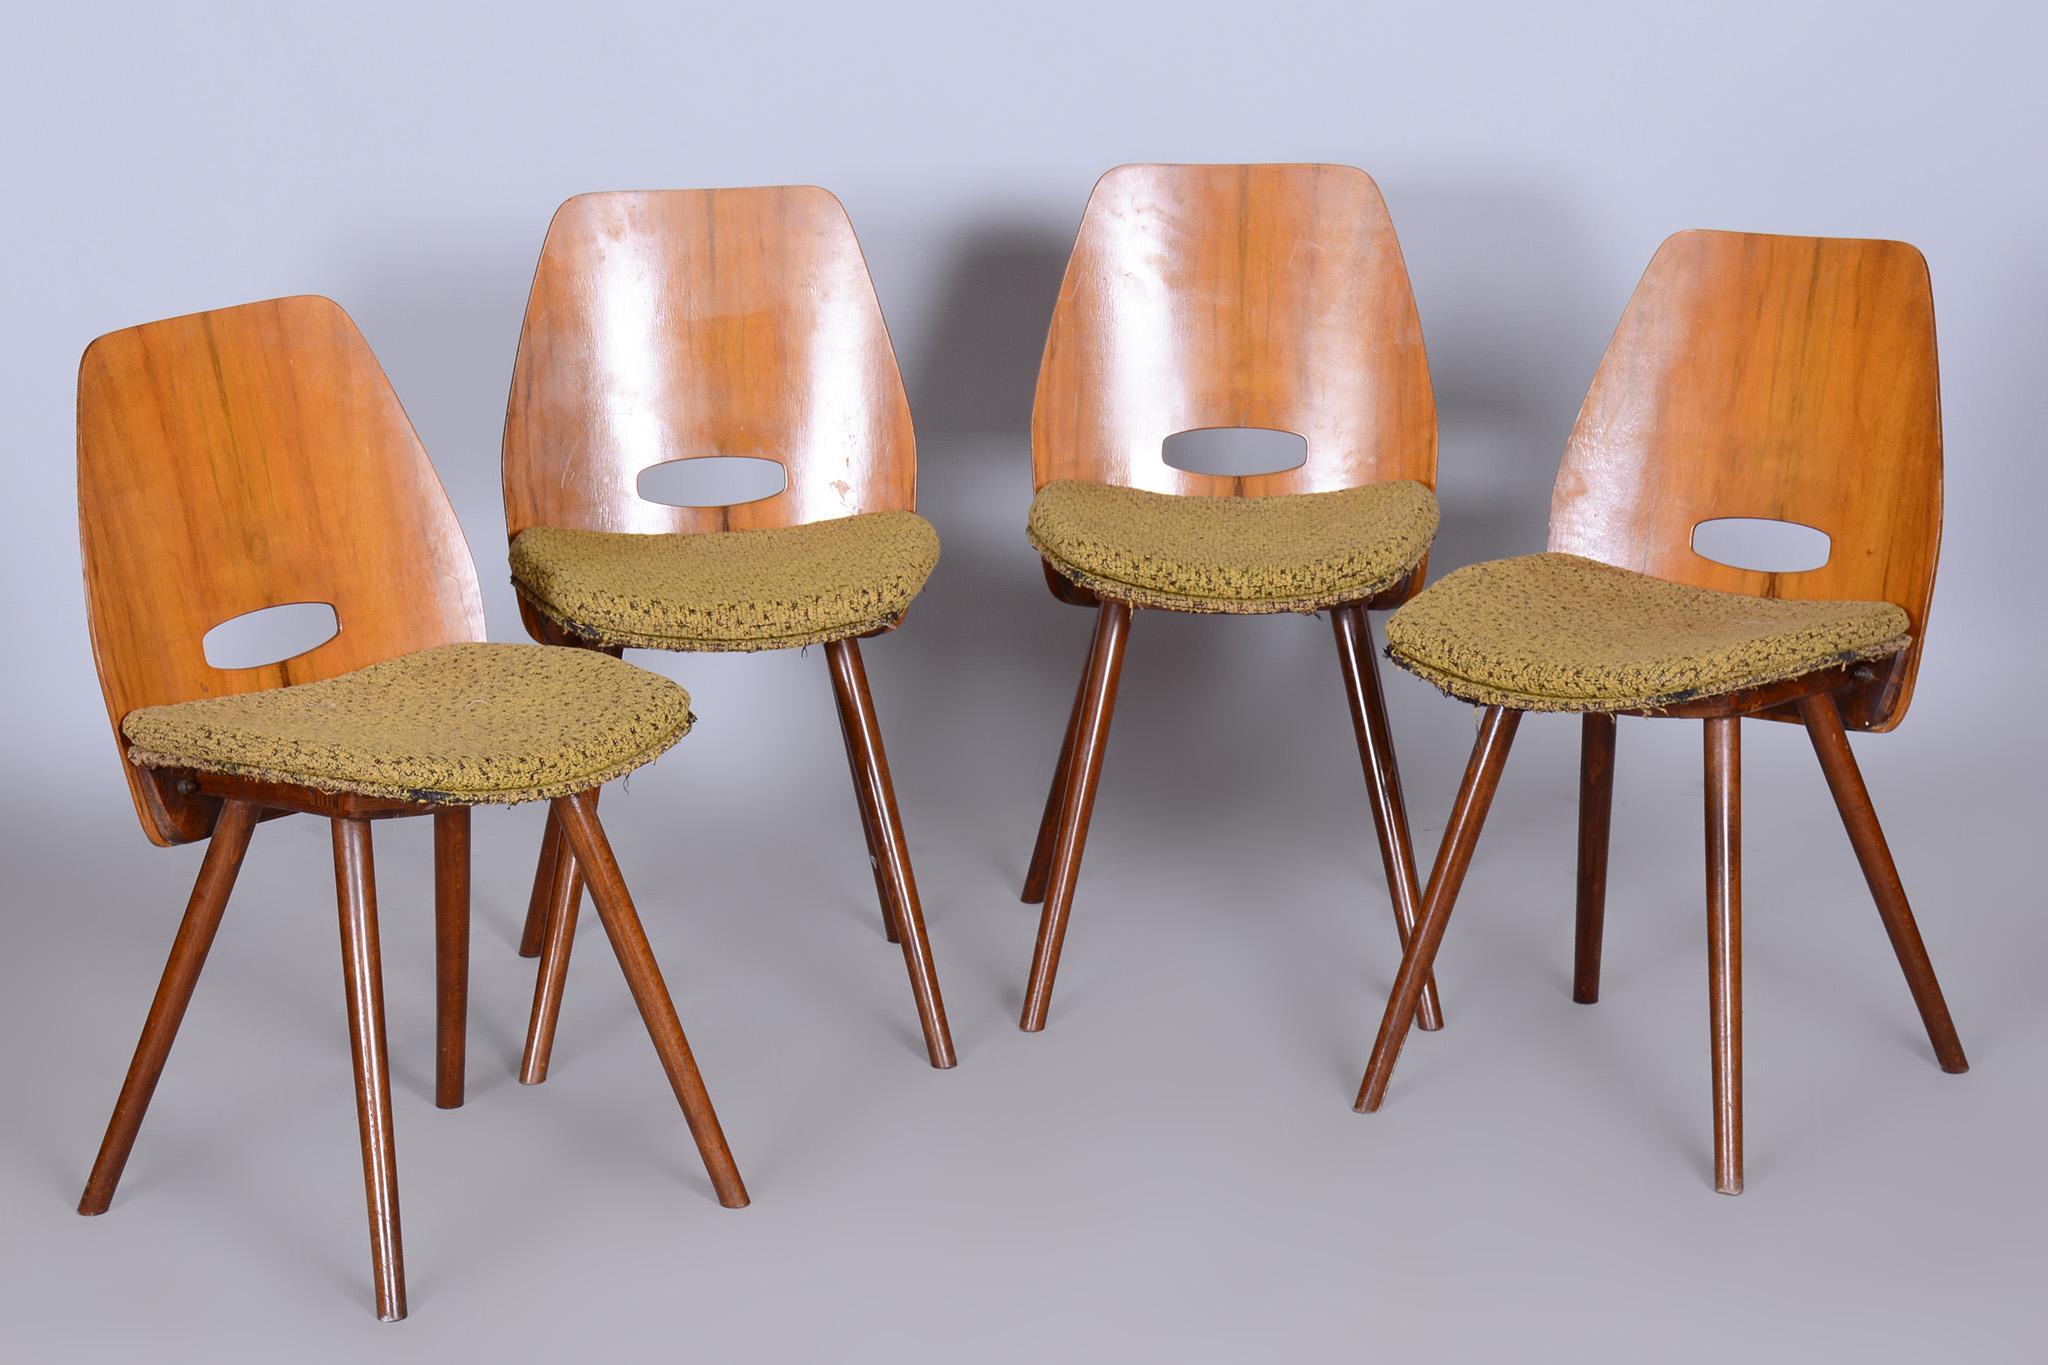 20th Century Set of Four Midcentury Walnut Chairs, Frantisek Jirak, Tatra, Czechia, 1950s For Sale